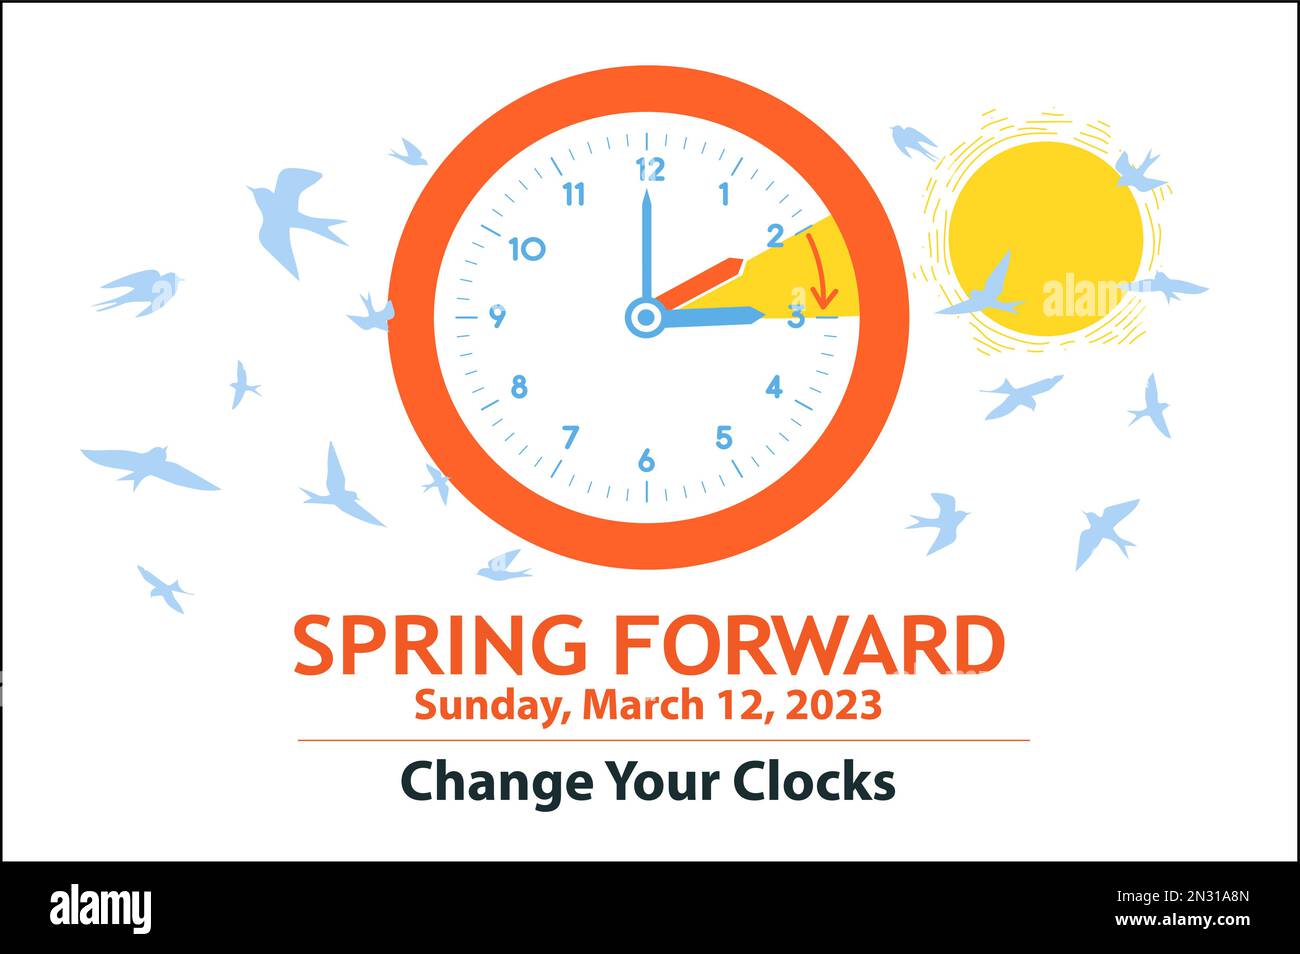 Spring Daylight Saving Time 2023. Banner reminder with changing